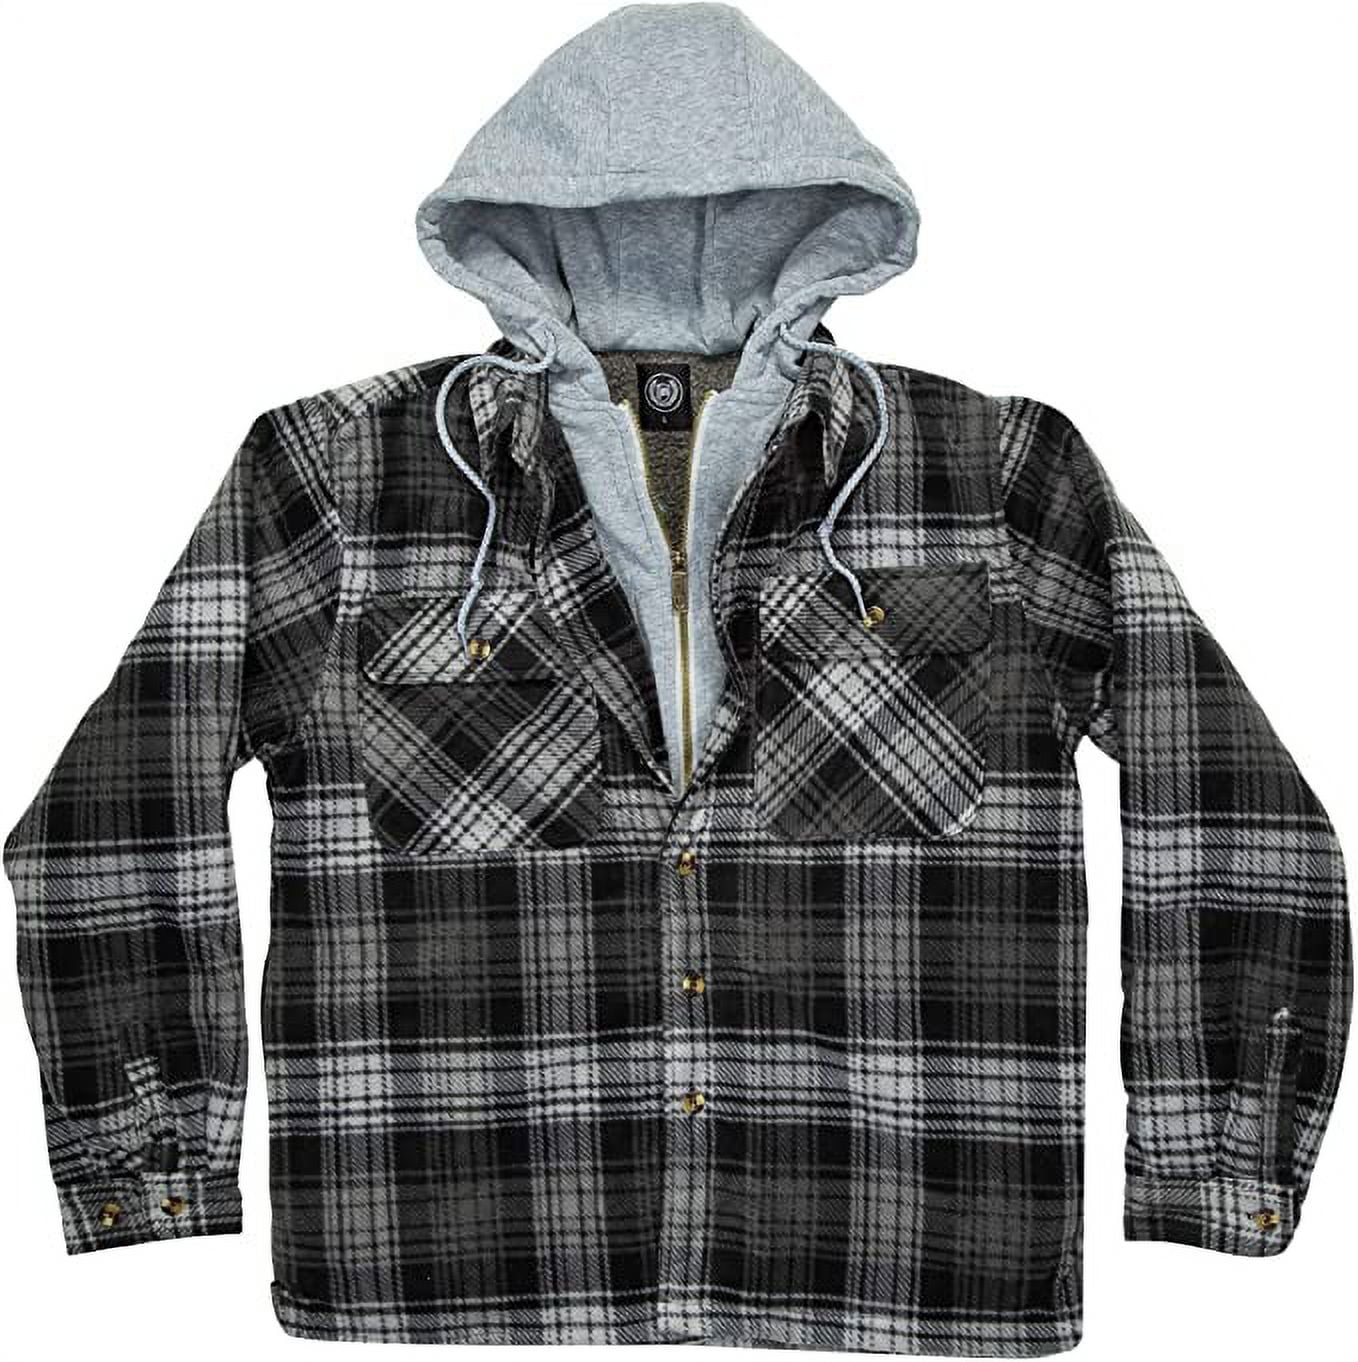 Men’s Cozy Fleece Sherpa Lined Hooded Jacket-1825-Design3-XL - Walmart.com